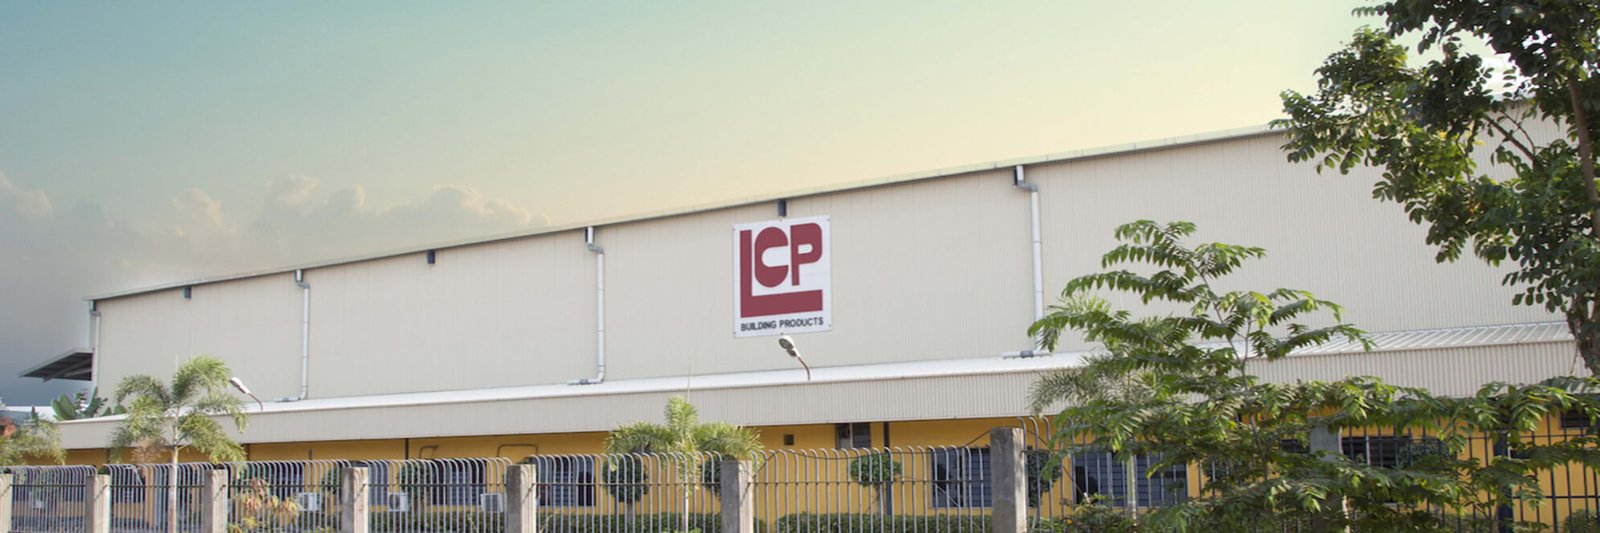 best roof sheet manufacturer in Dubai: LCP Sliders